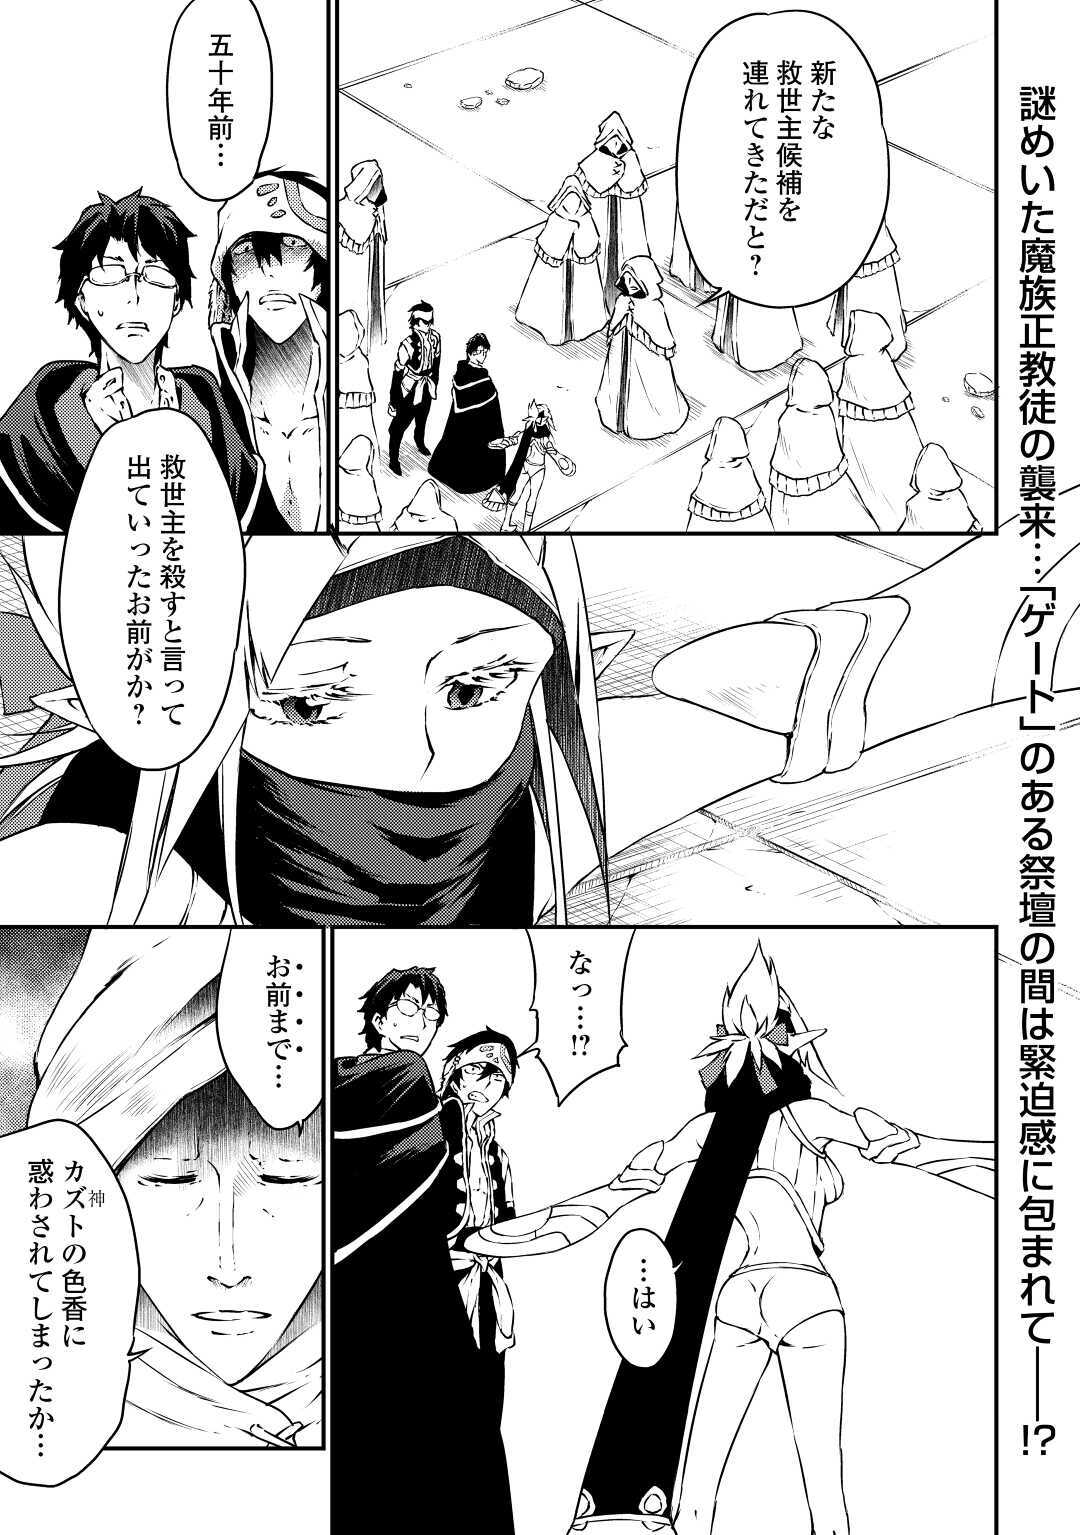 Yuusha no Mago to Maou no Musume - Chapter 28 - Page 1